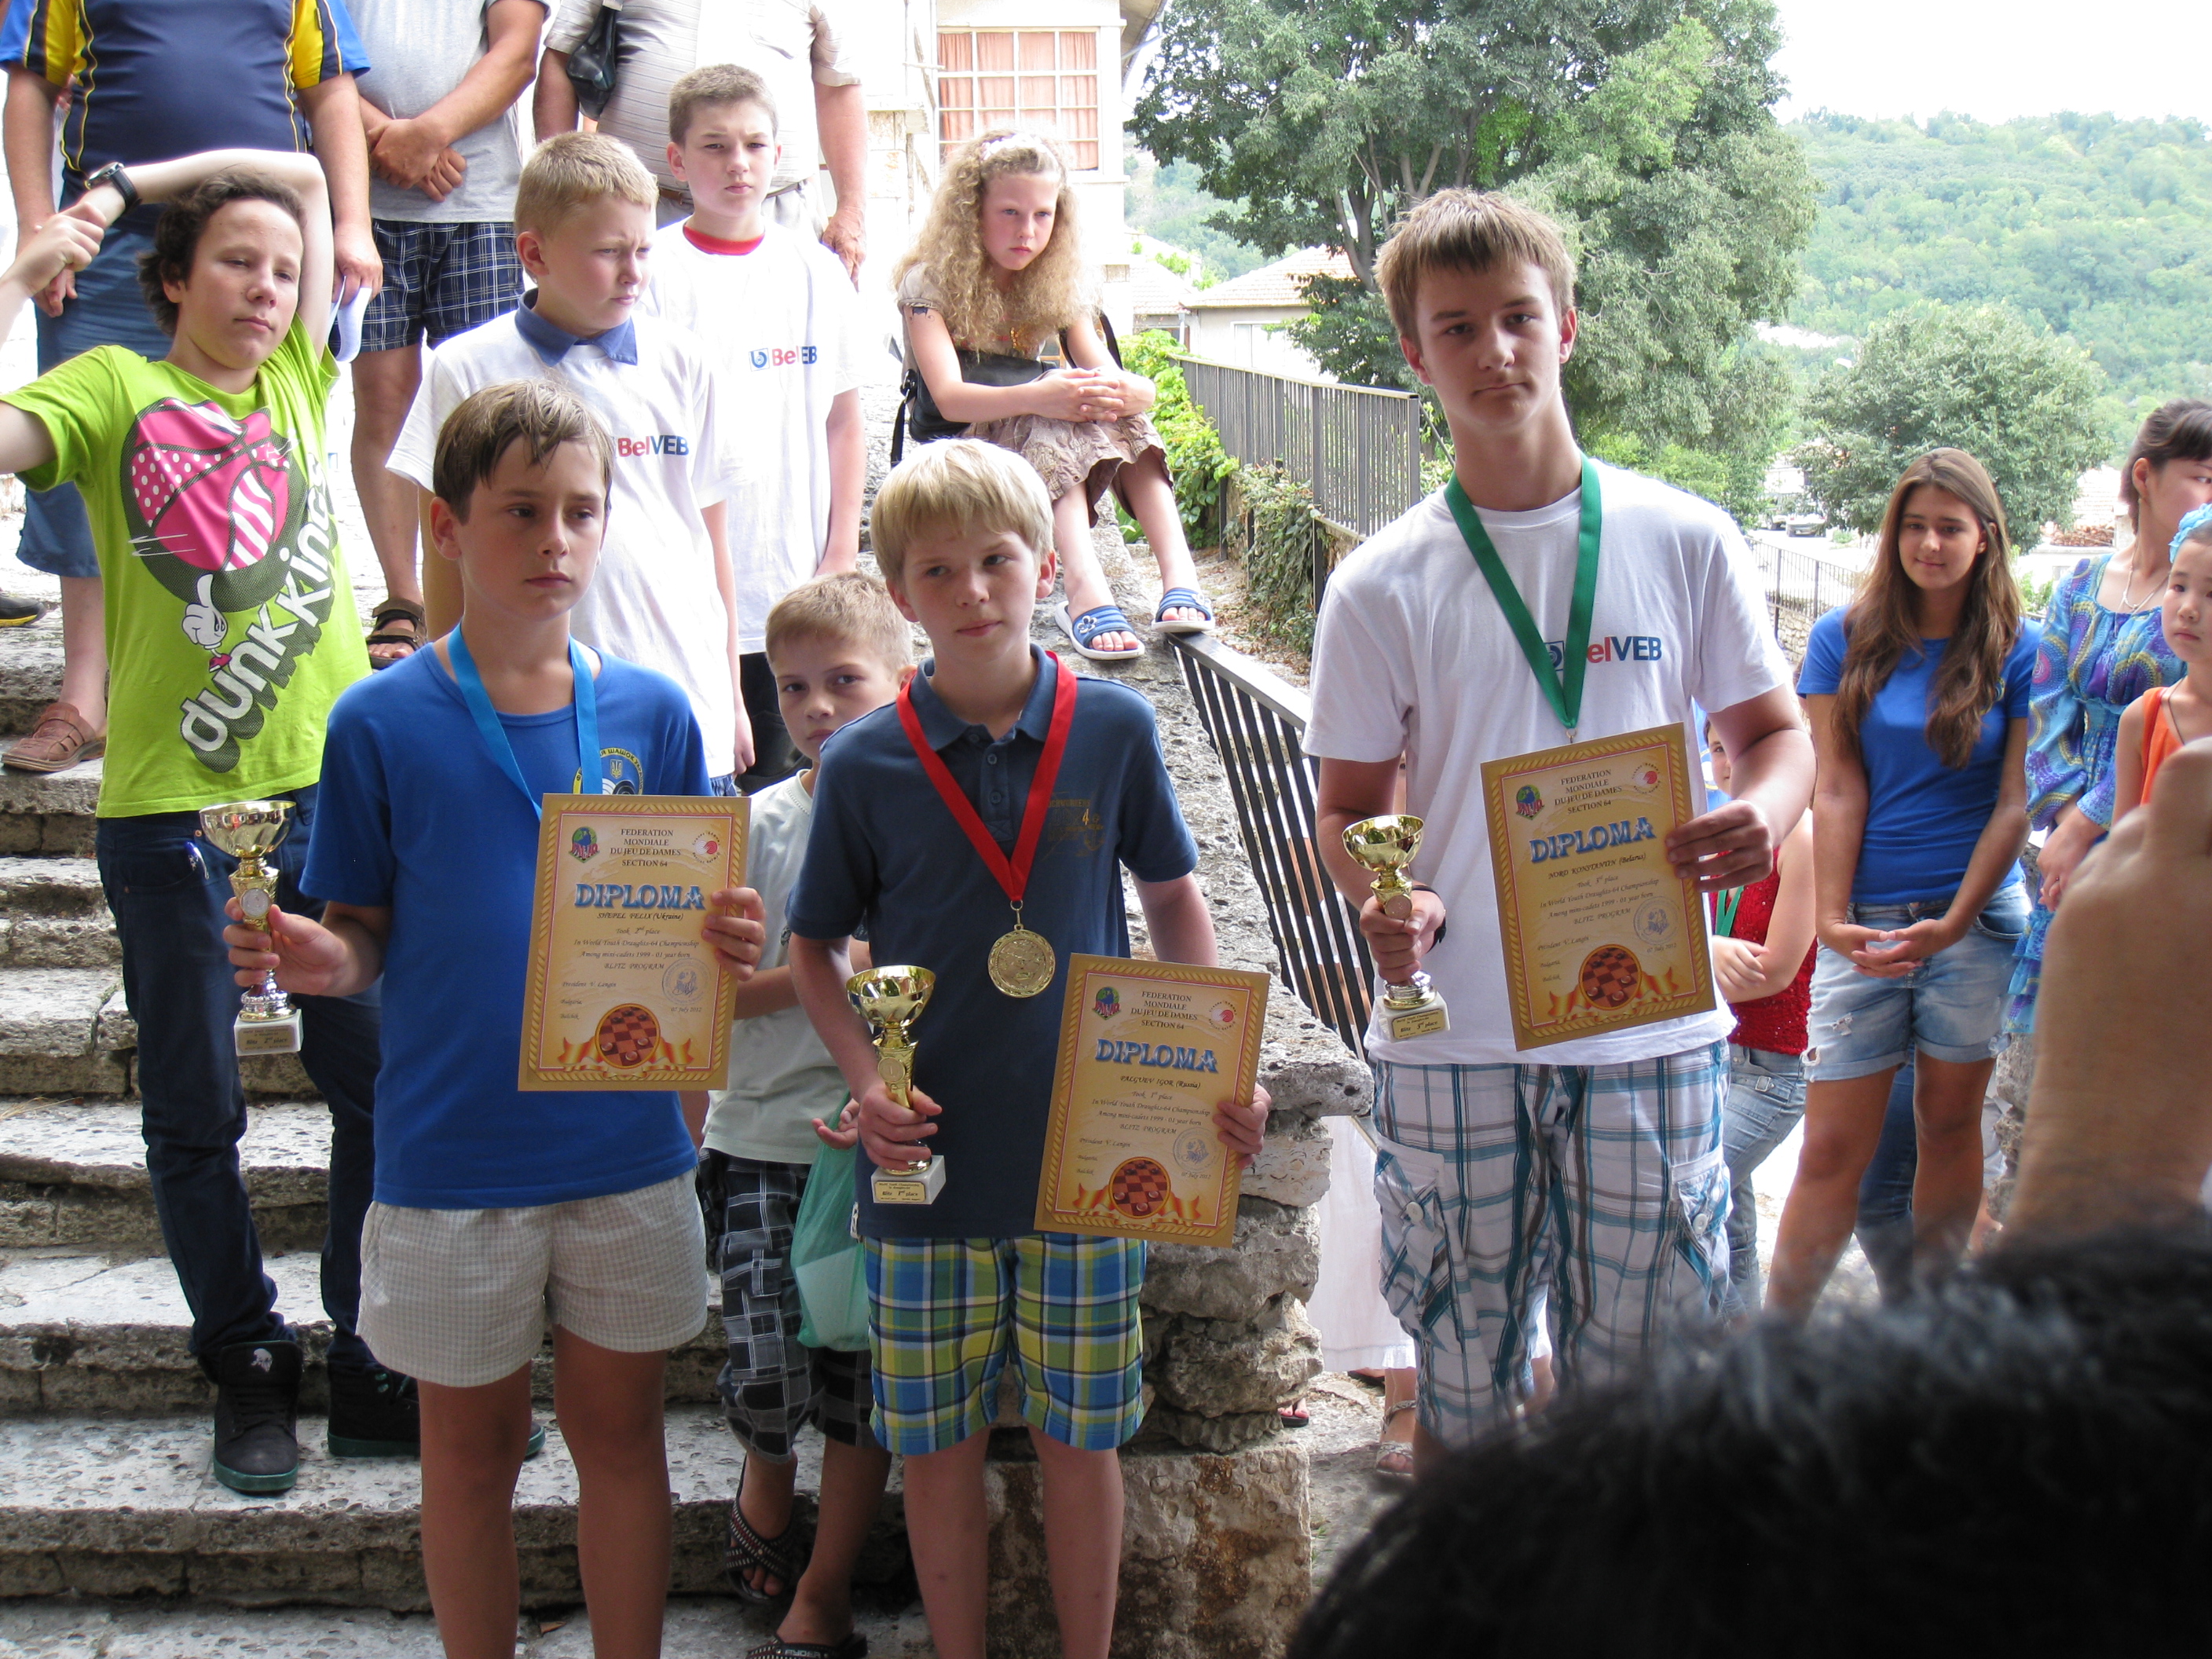        -   - World Youth Championship in Balchik, Bulgaria 6-15.07.2012 - IMG_3043 - IMG_3043.JPG